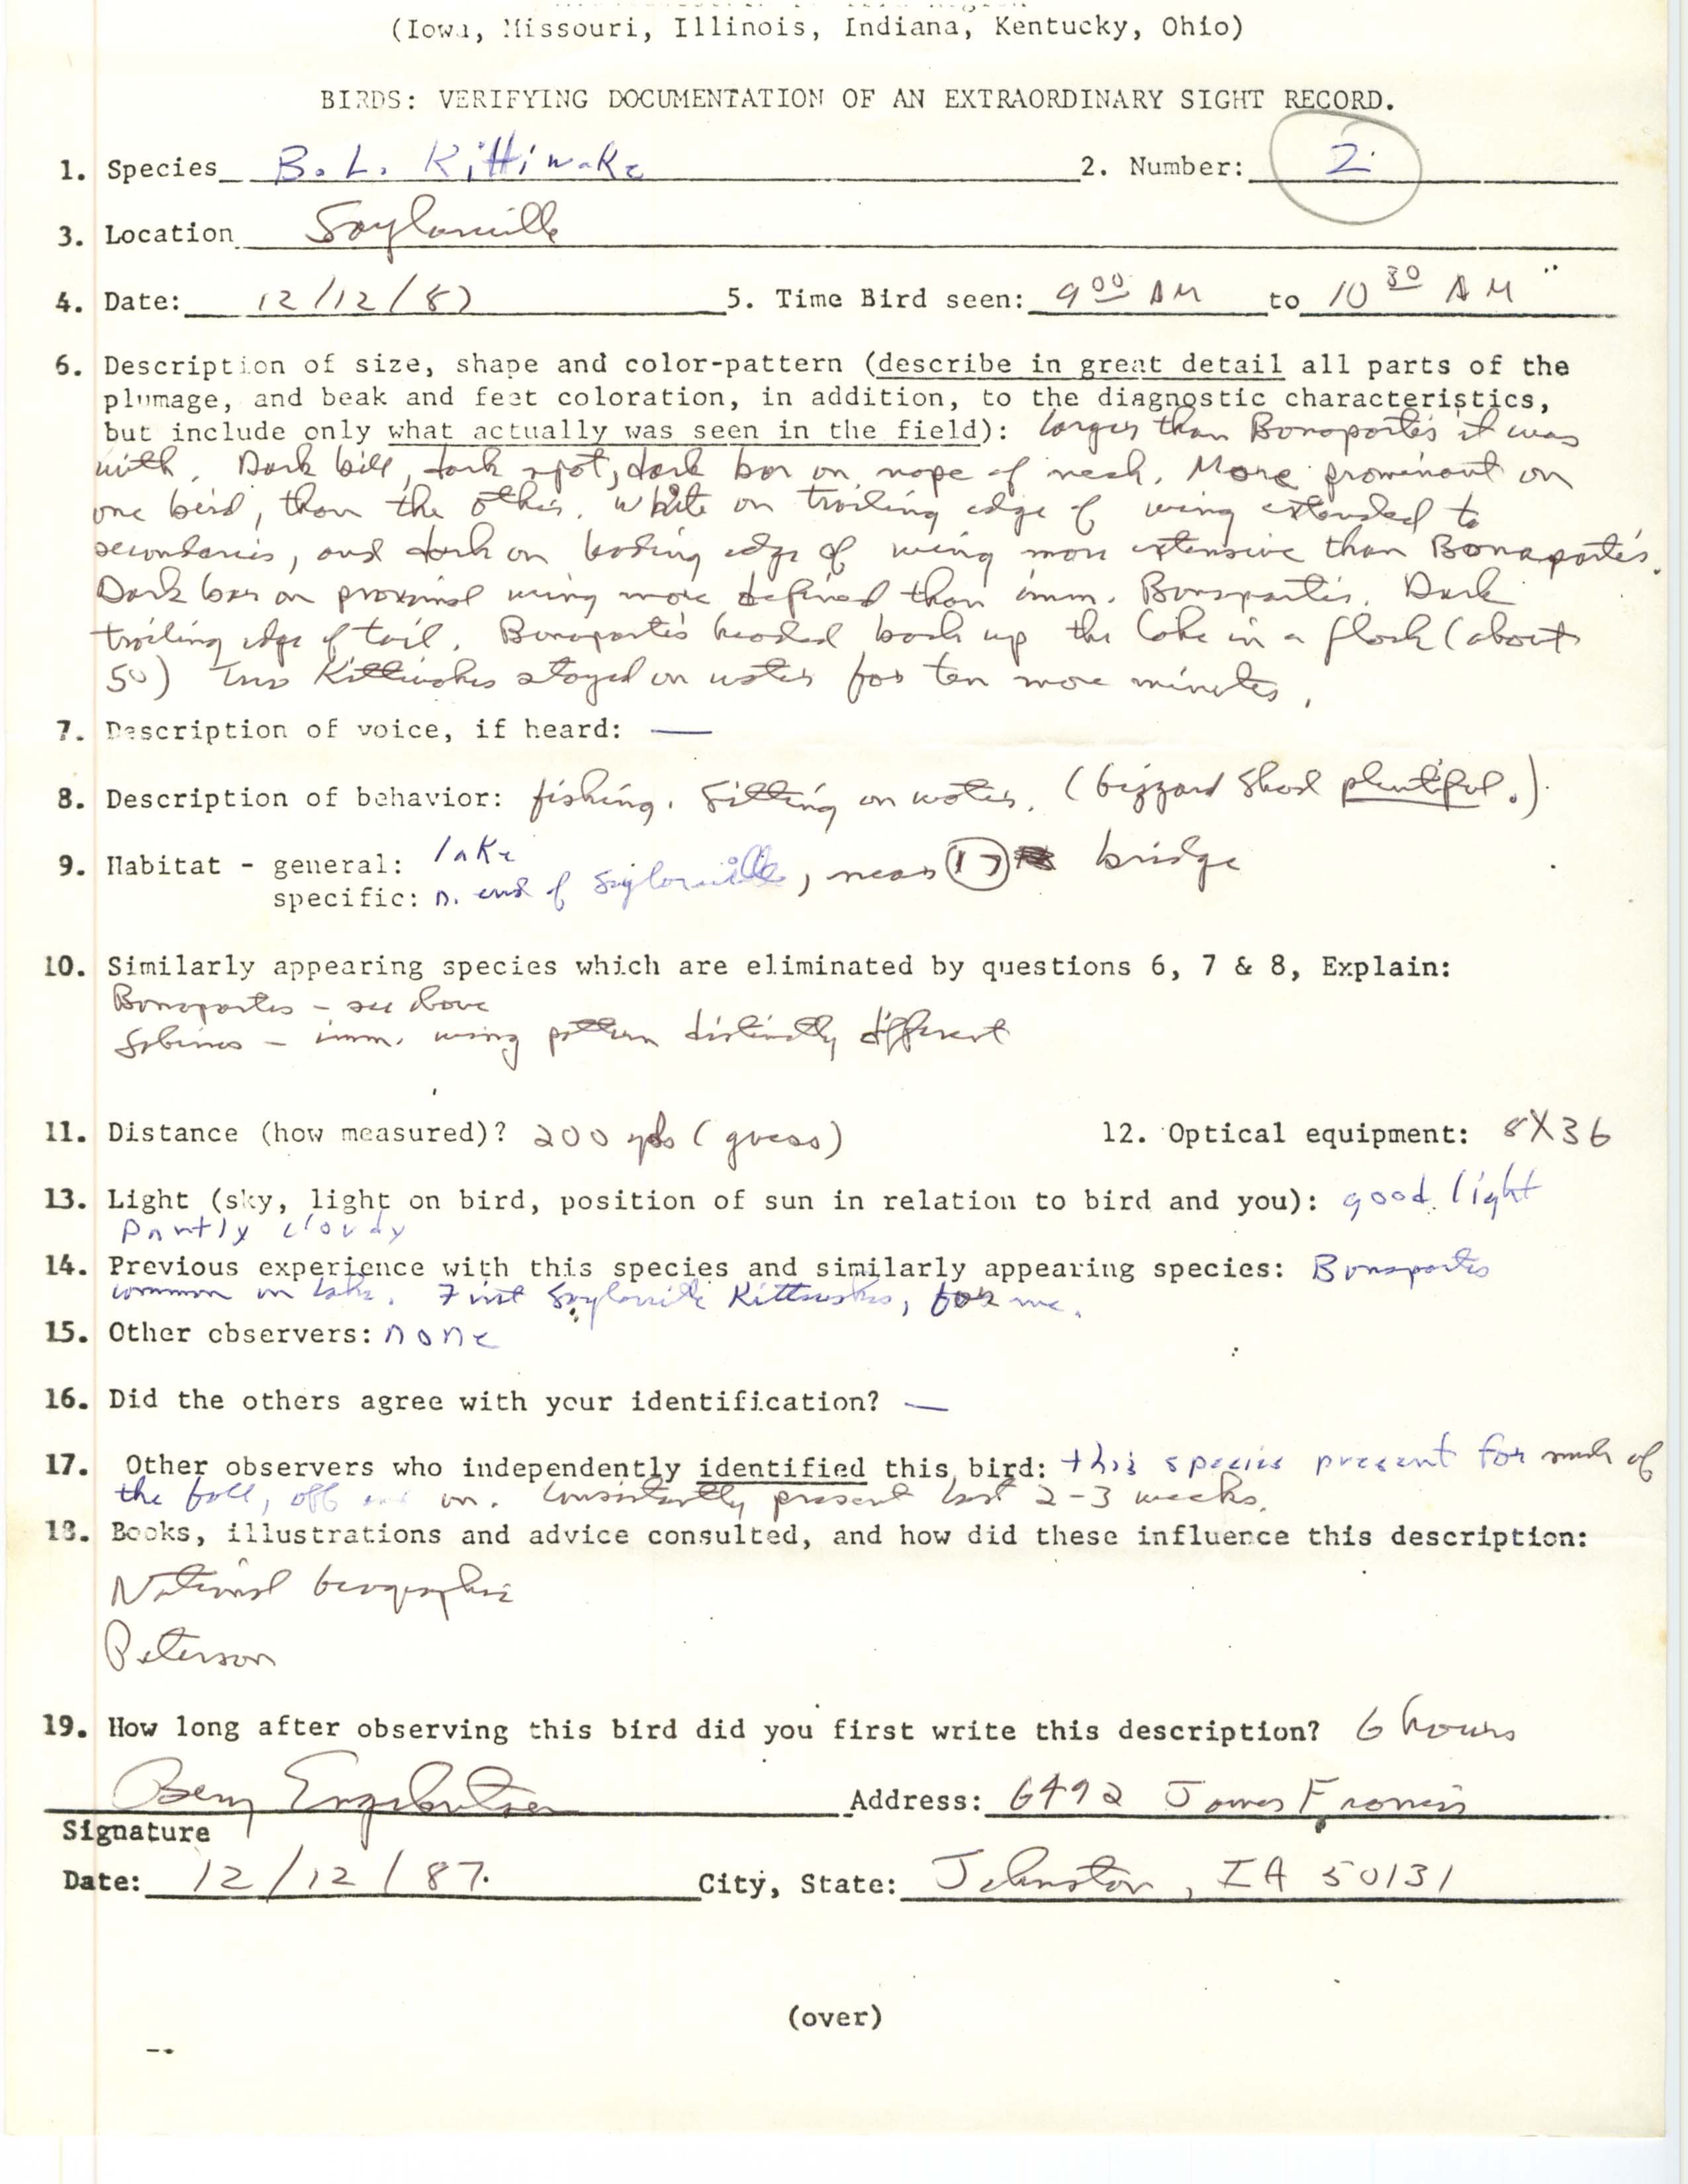 Rare bird documentation form for Black-legged Kittiwake at Saylorville, 1987